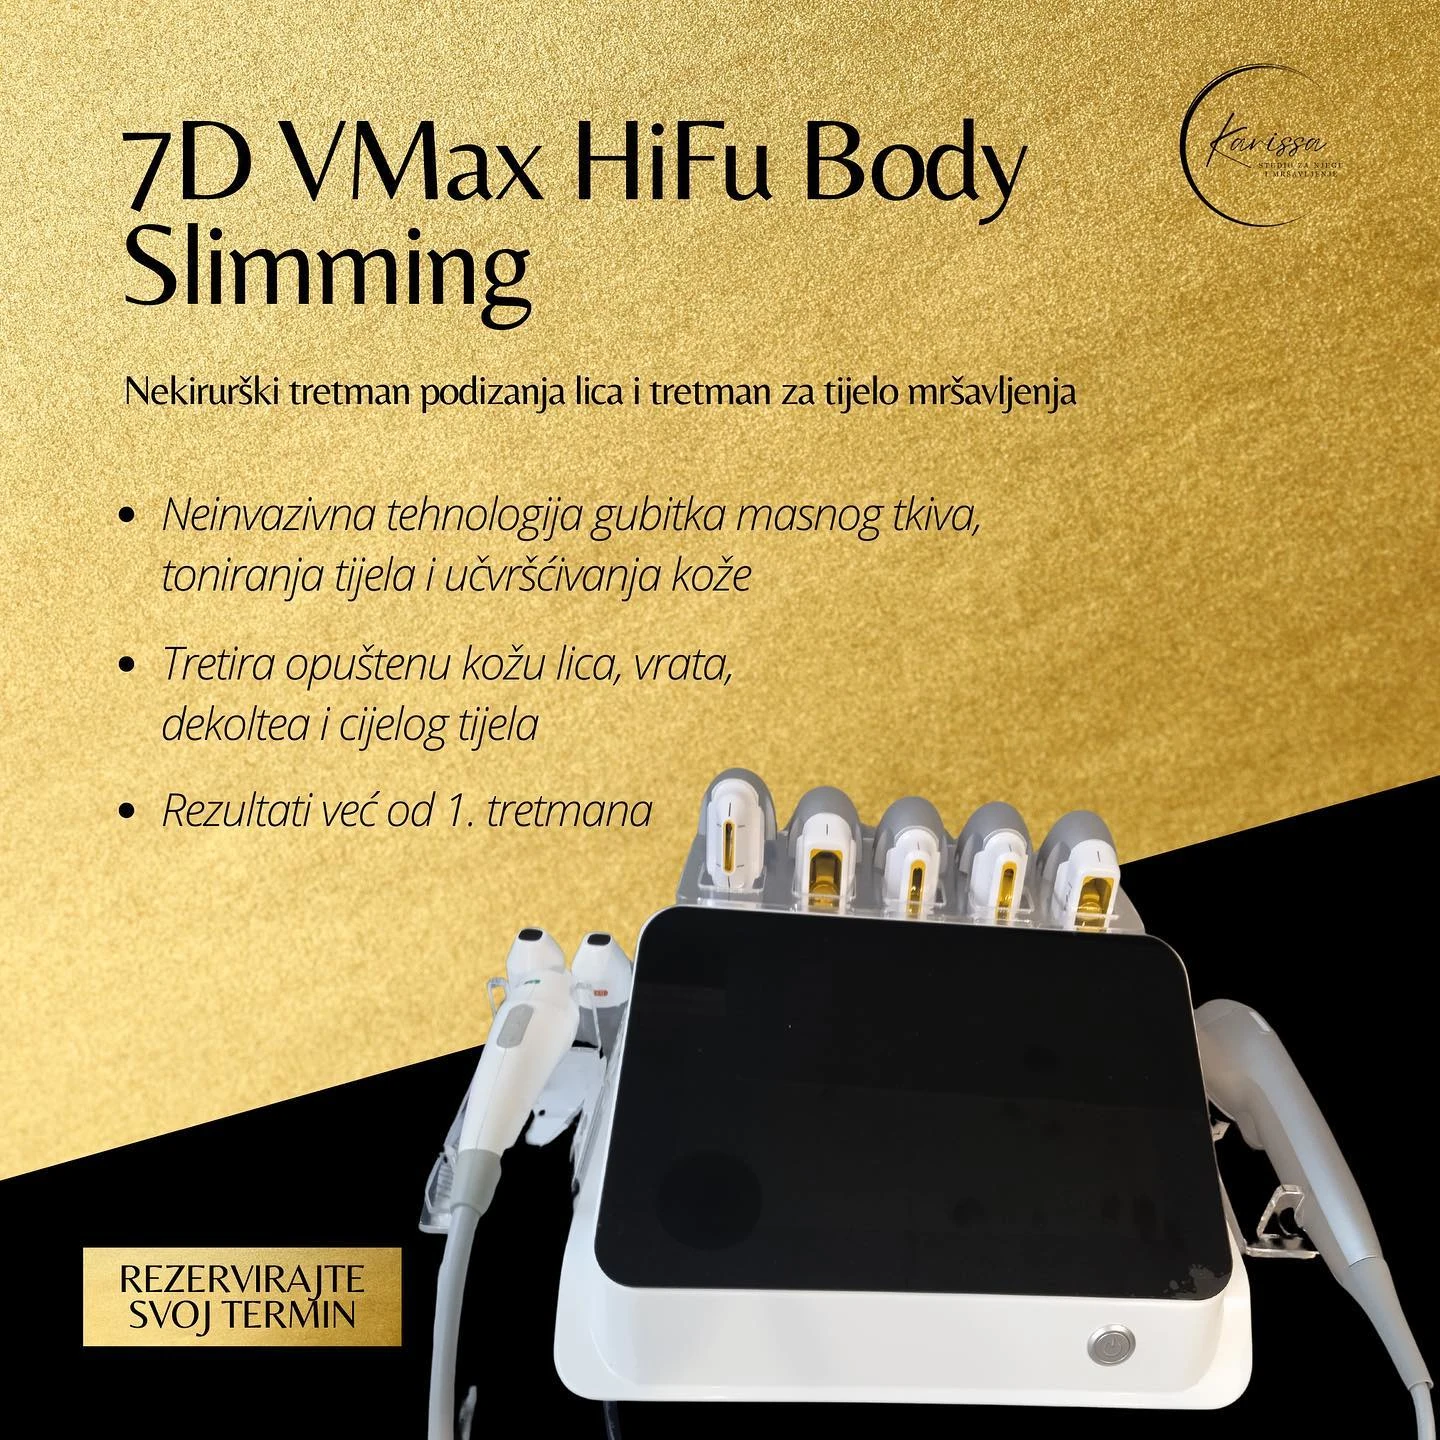 7D VMax HiFu Body Slimming